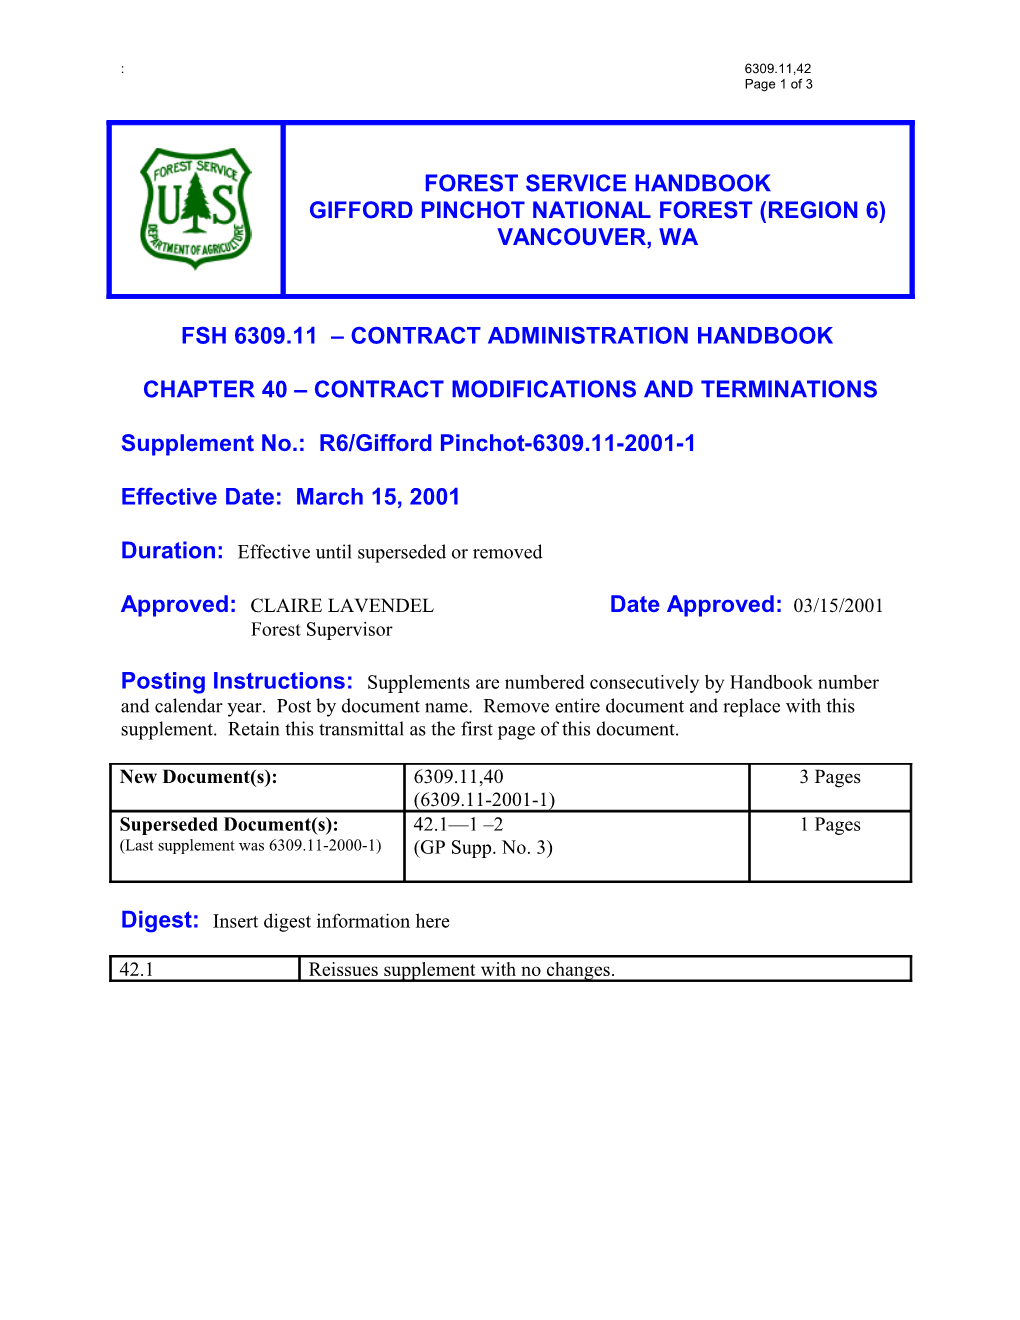 Fsh 6309.11 Contract Administration Handbook